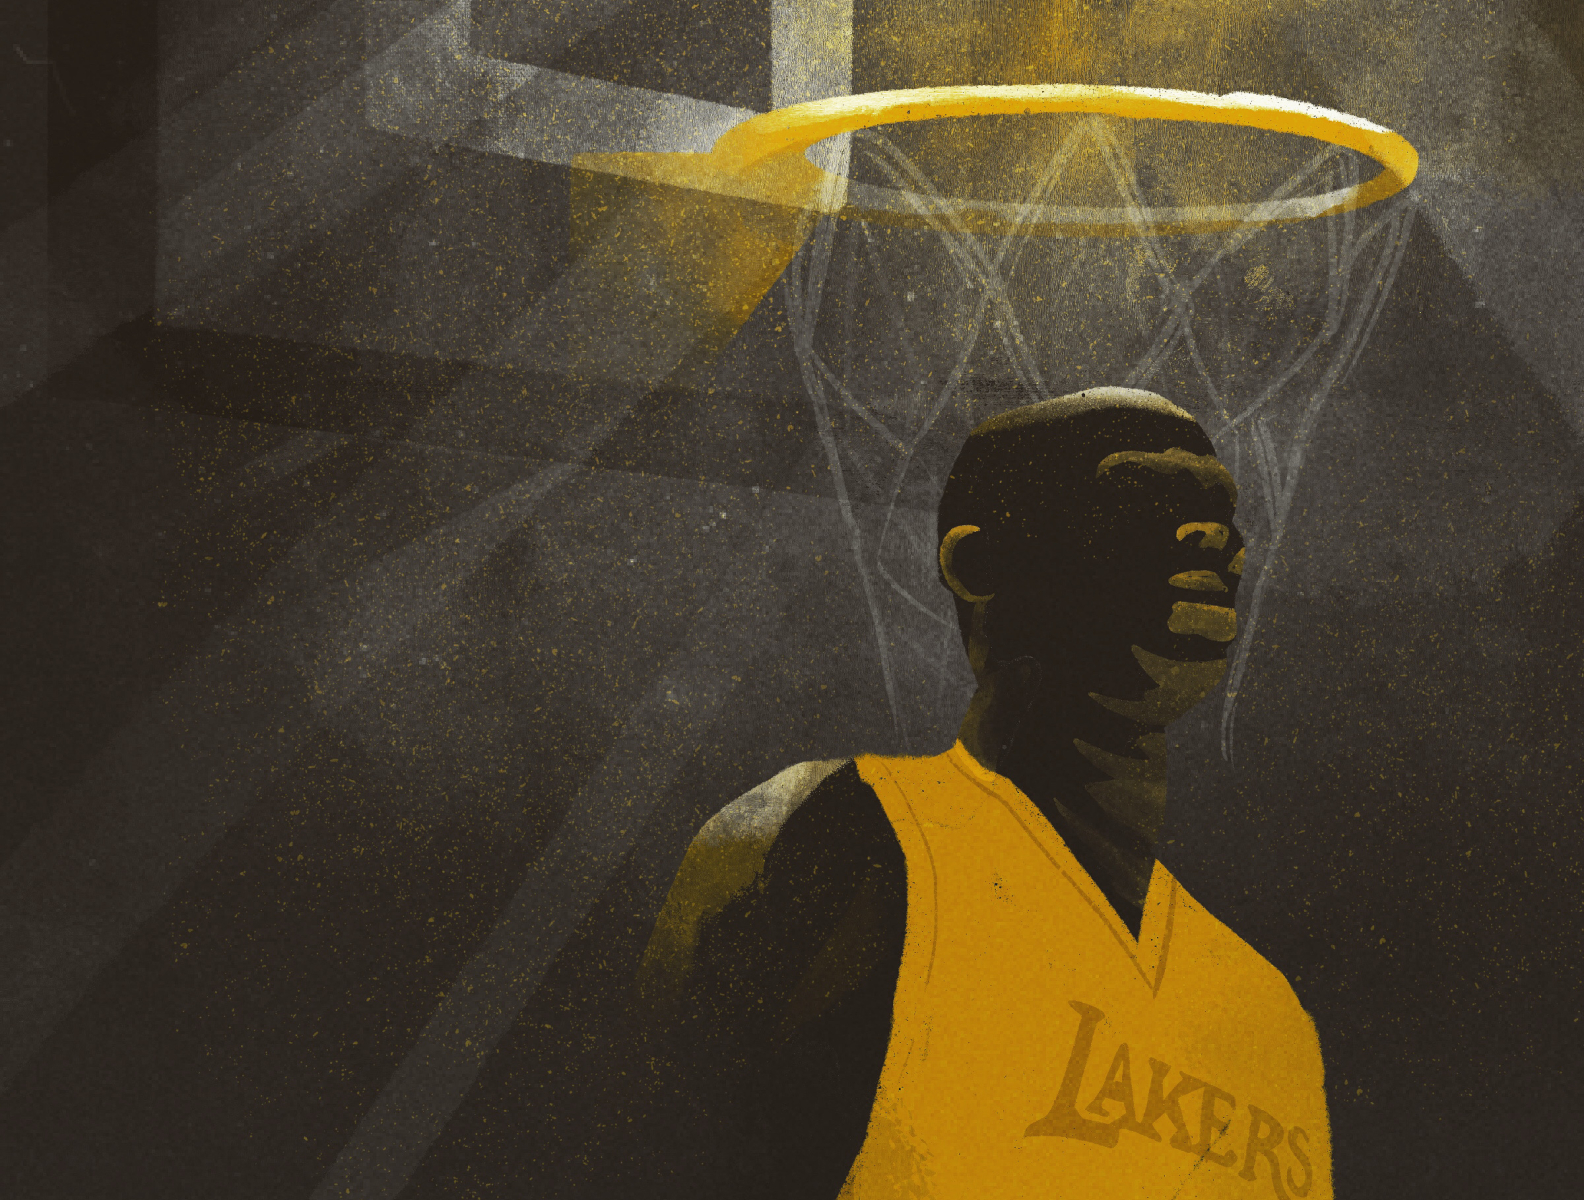 Kobe nba kobe heavenly lakers procreate texture illustration digital basketball design illustration kobe bryant